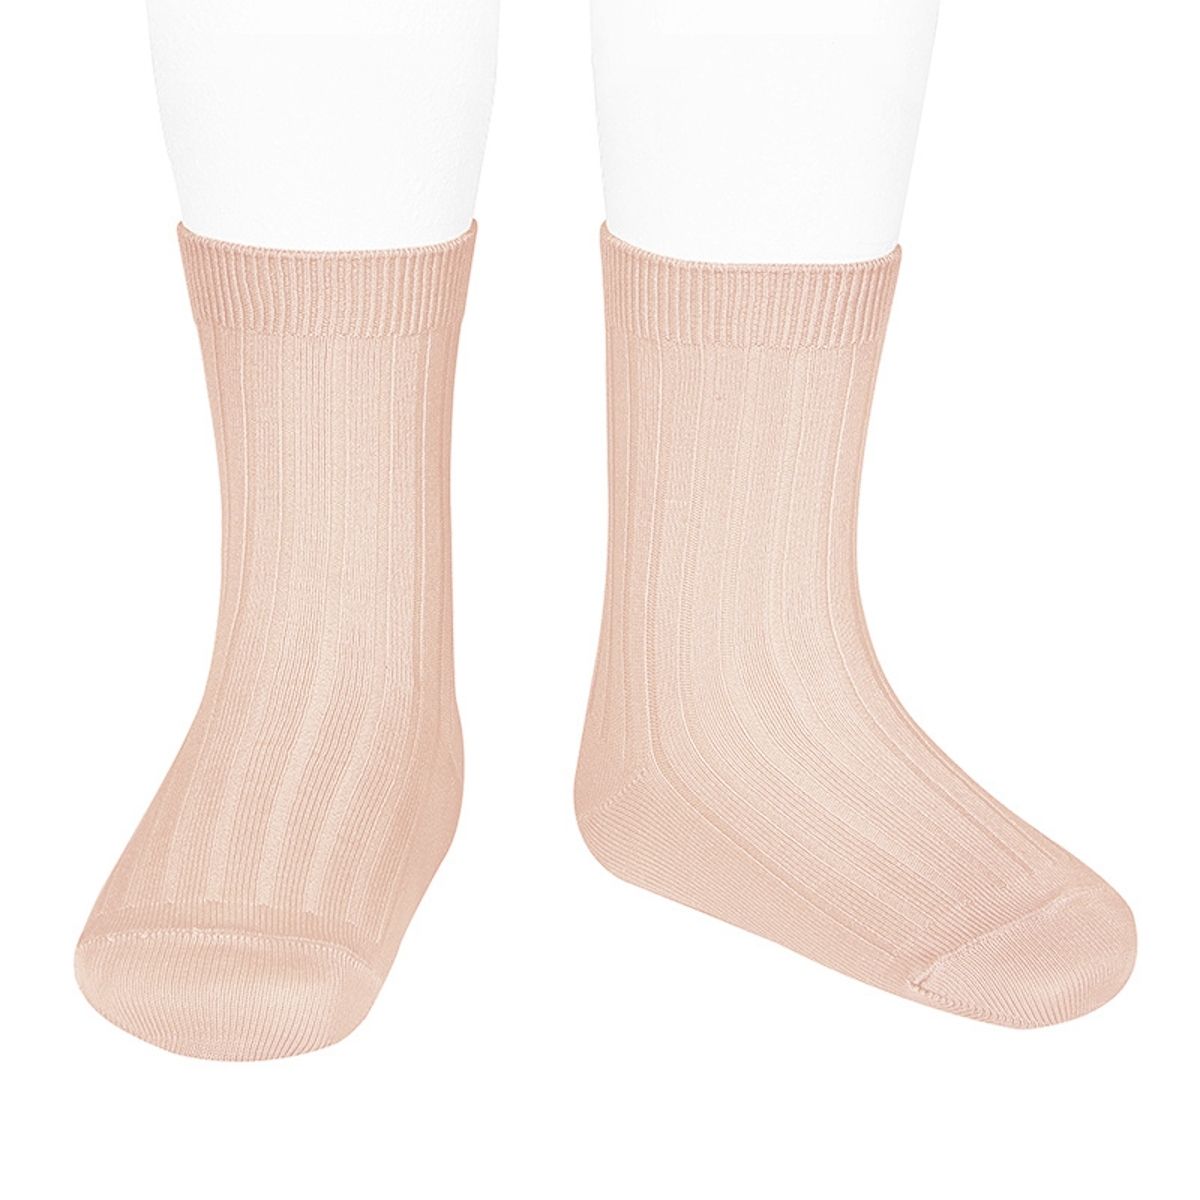 Condor - Basic Rib Short Socks nude - Collants et chaussettes - 1